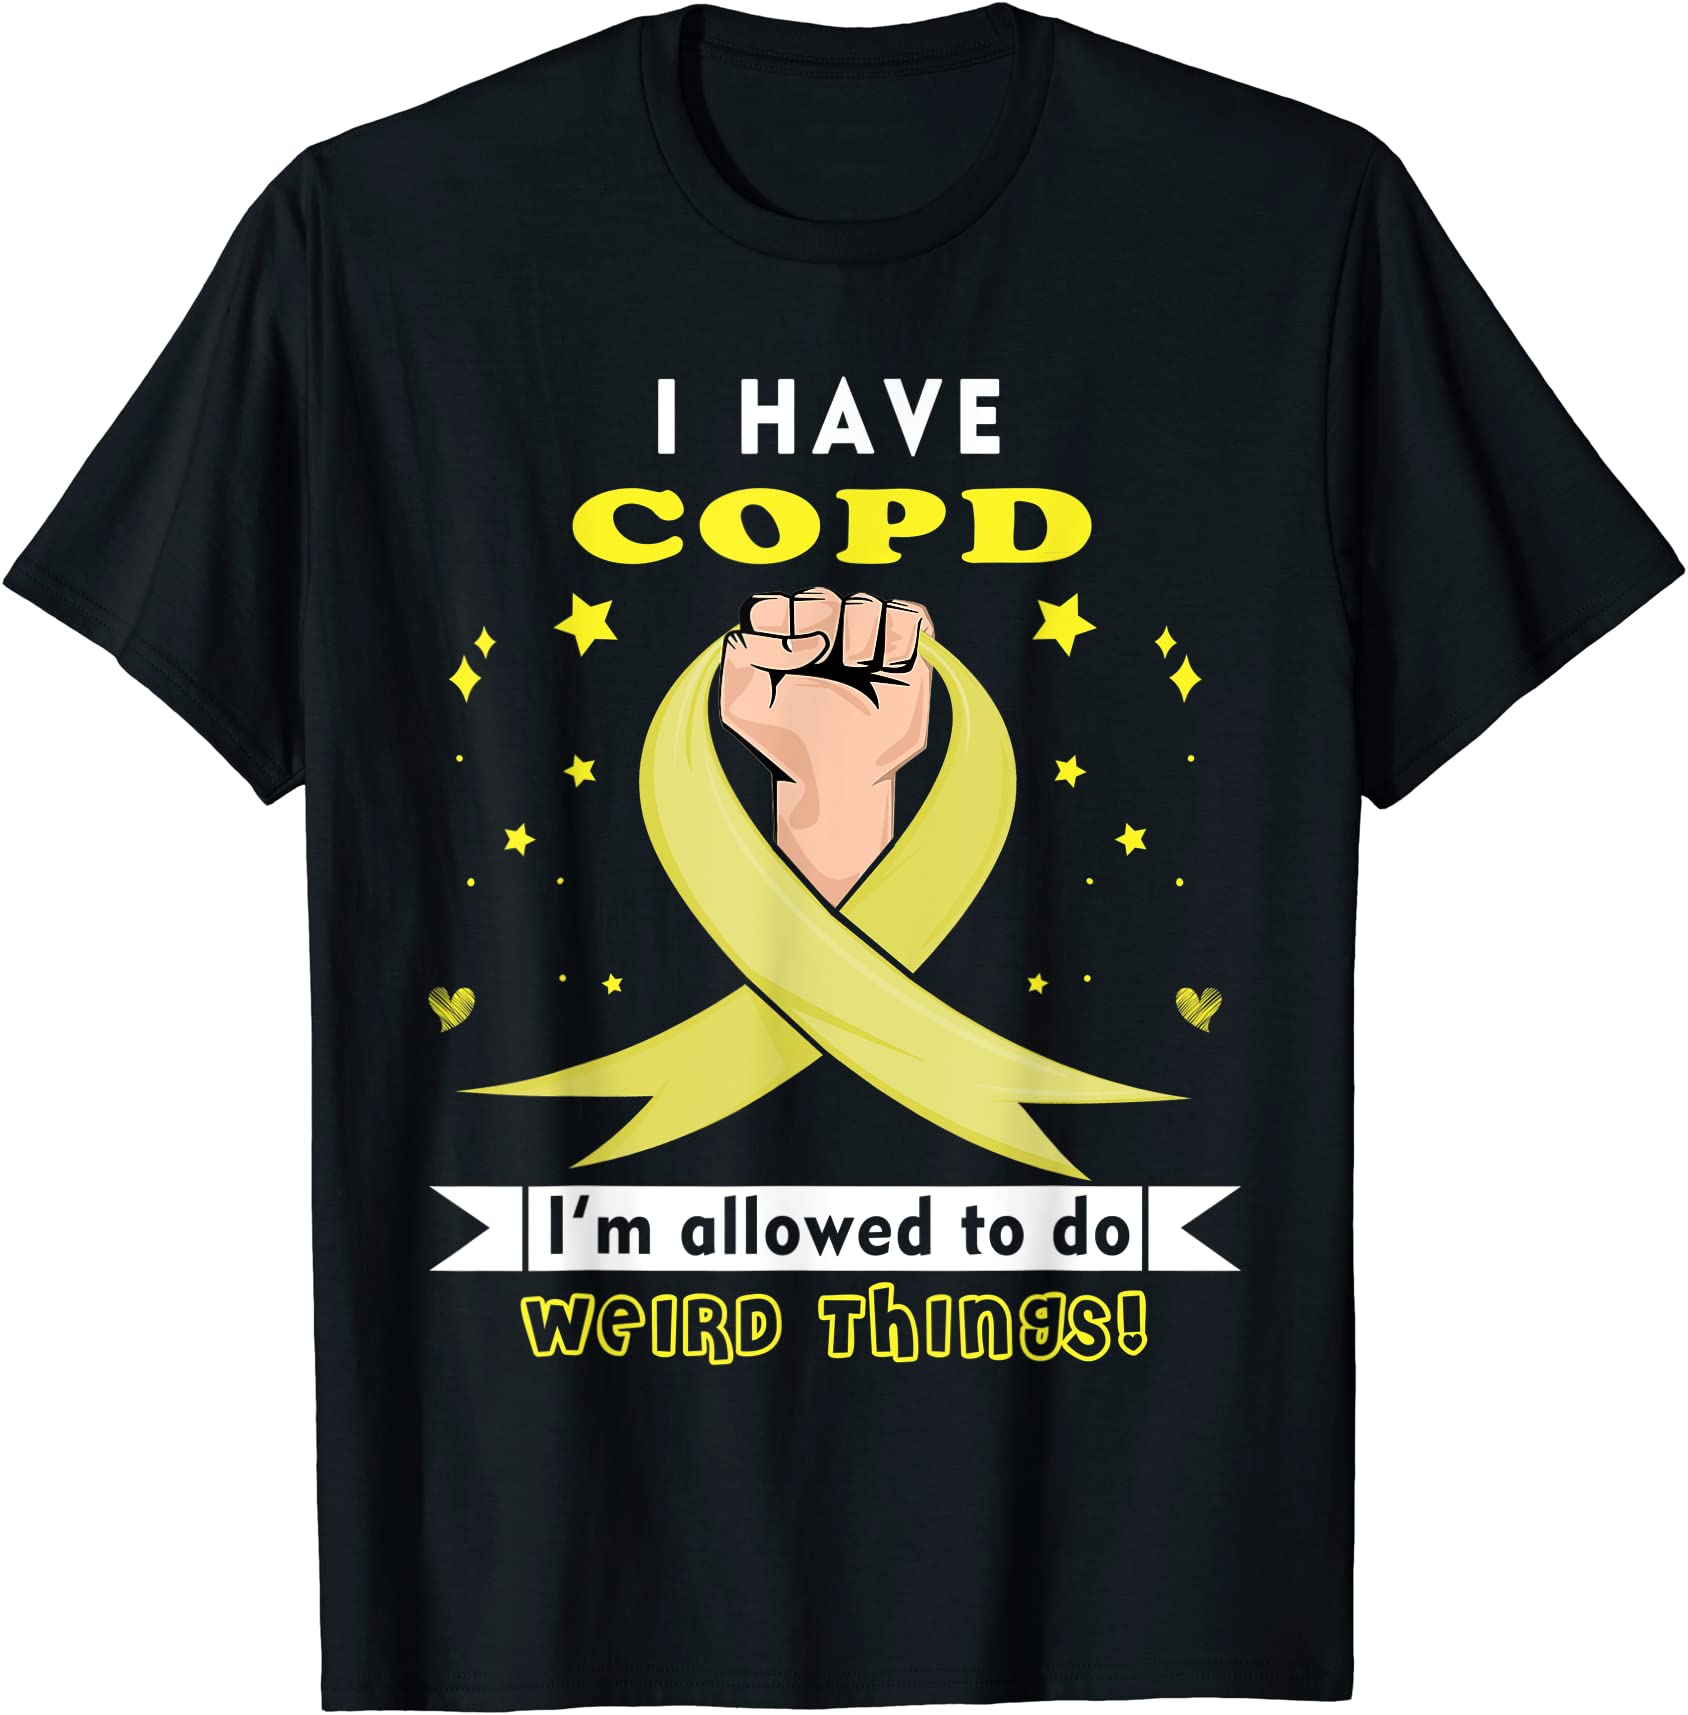 i have copd awareness t shirt men - Buy t-shirt designs